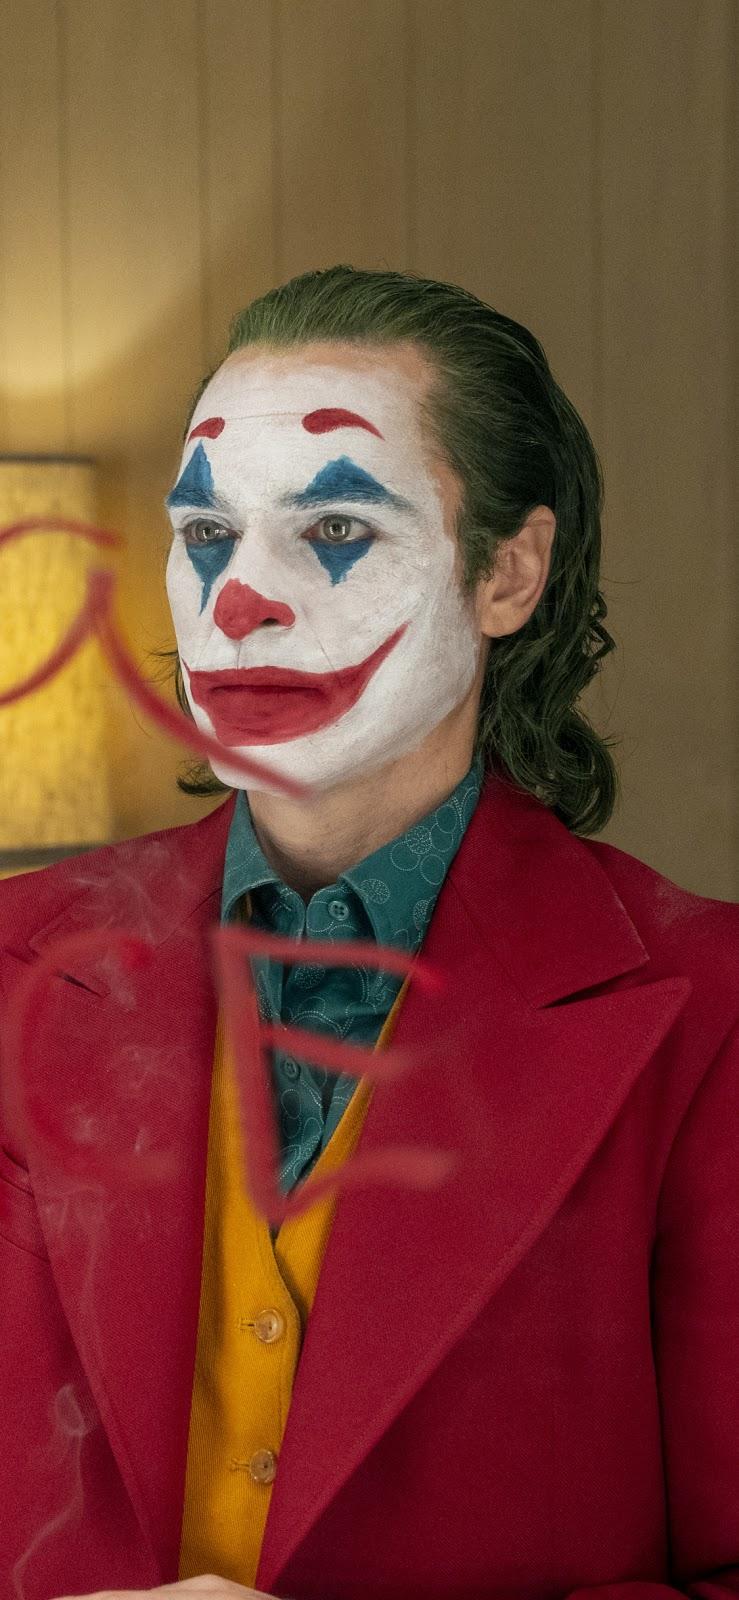 Joaquin Phoenix's Joker 2019 Movie Mobile Wallpaper Mobile Walls